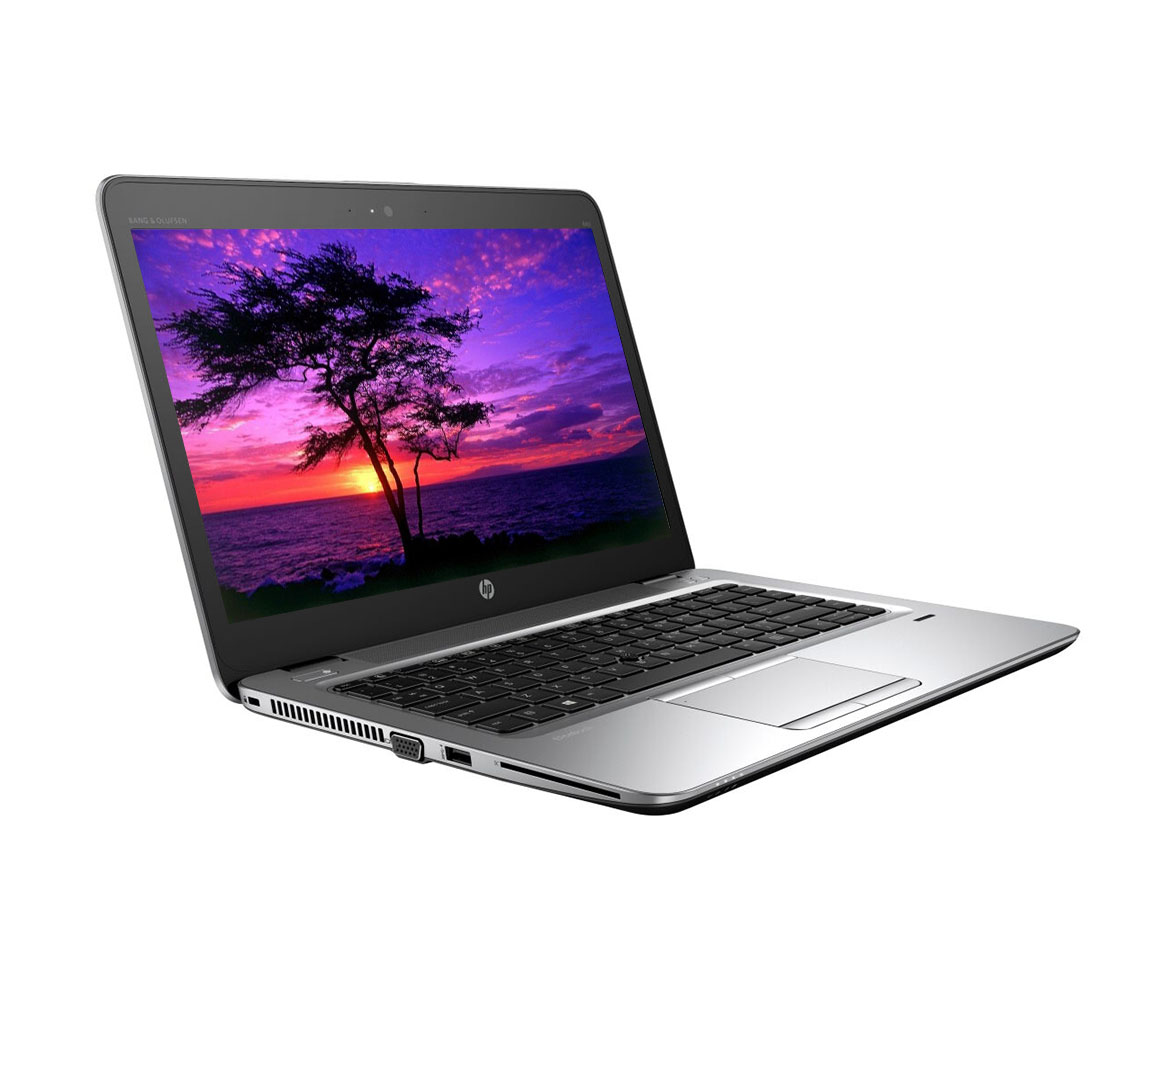 HP EliteBook 840 G3 Business Laptop, Intel Core i5-6th Generation CPU, 8GB RAM, 1T SSD, 14 inch Display, Windows 10 Pro